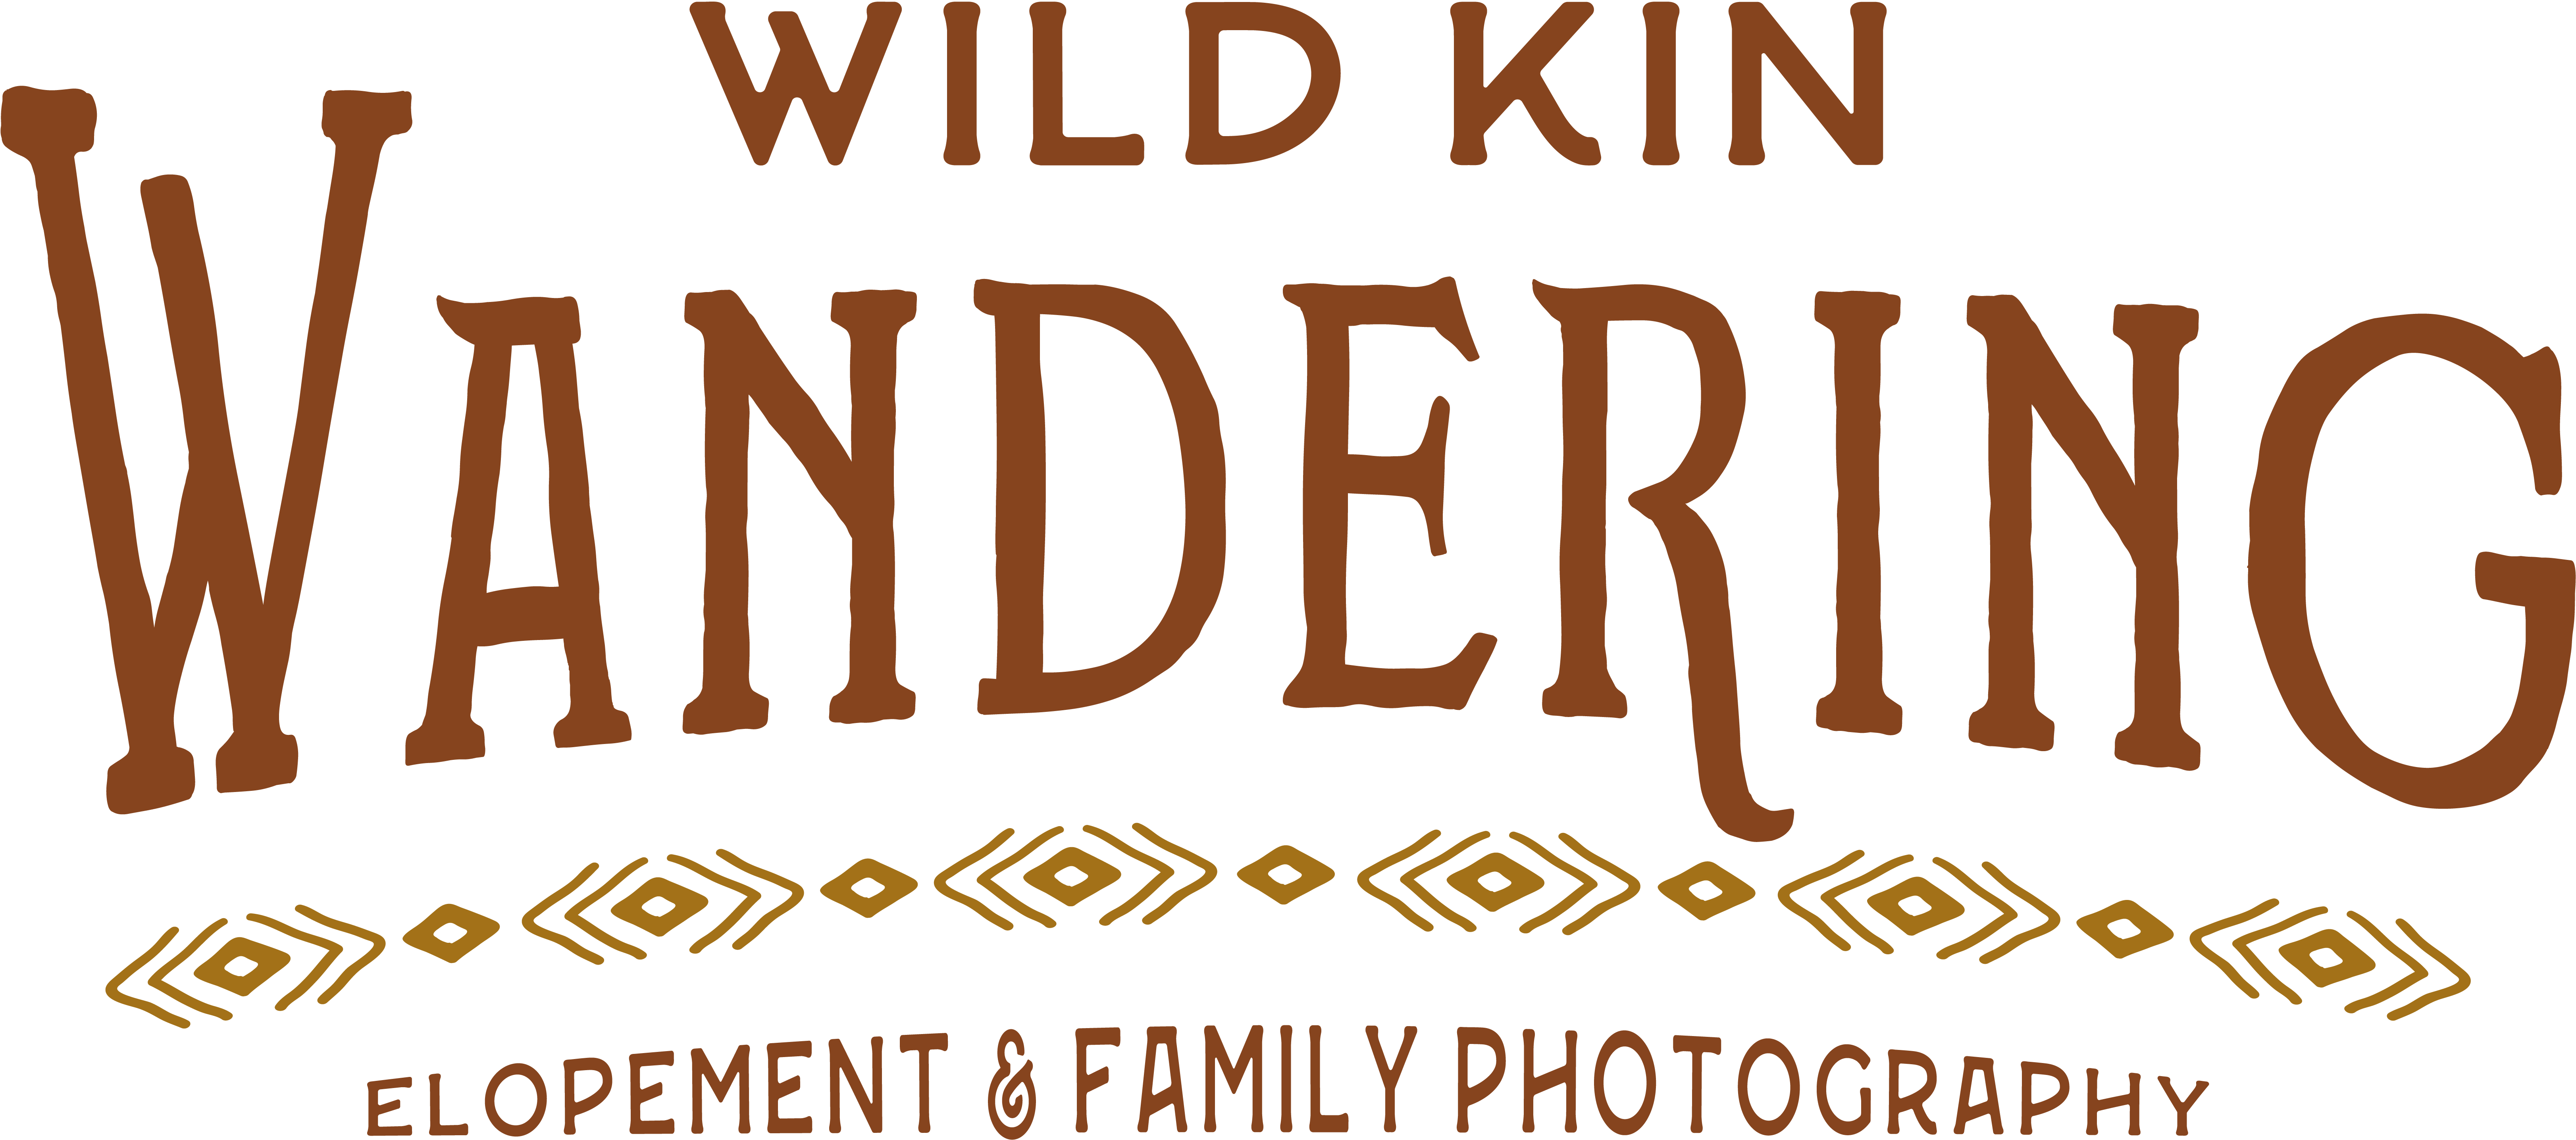 Wild Kin Wandering - Family Photography